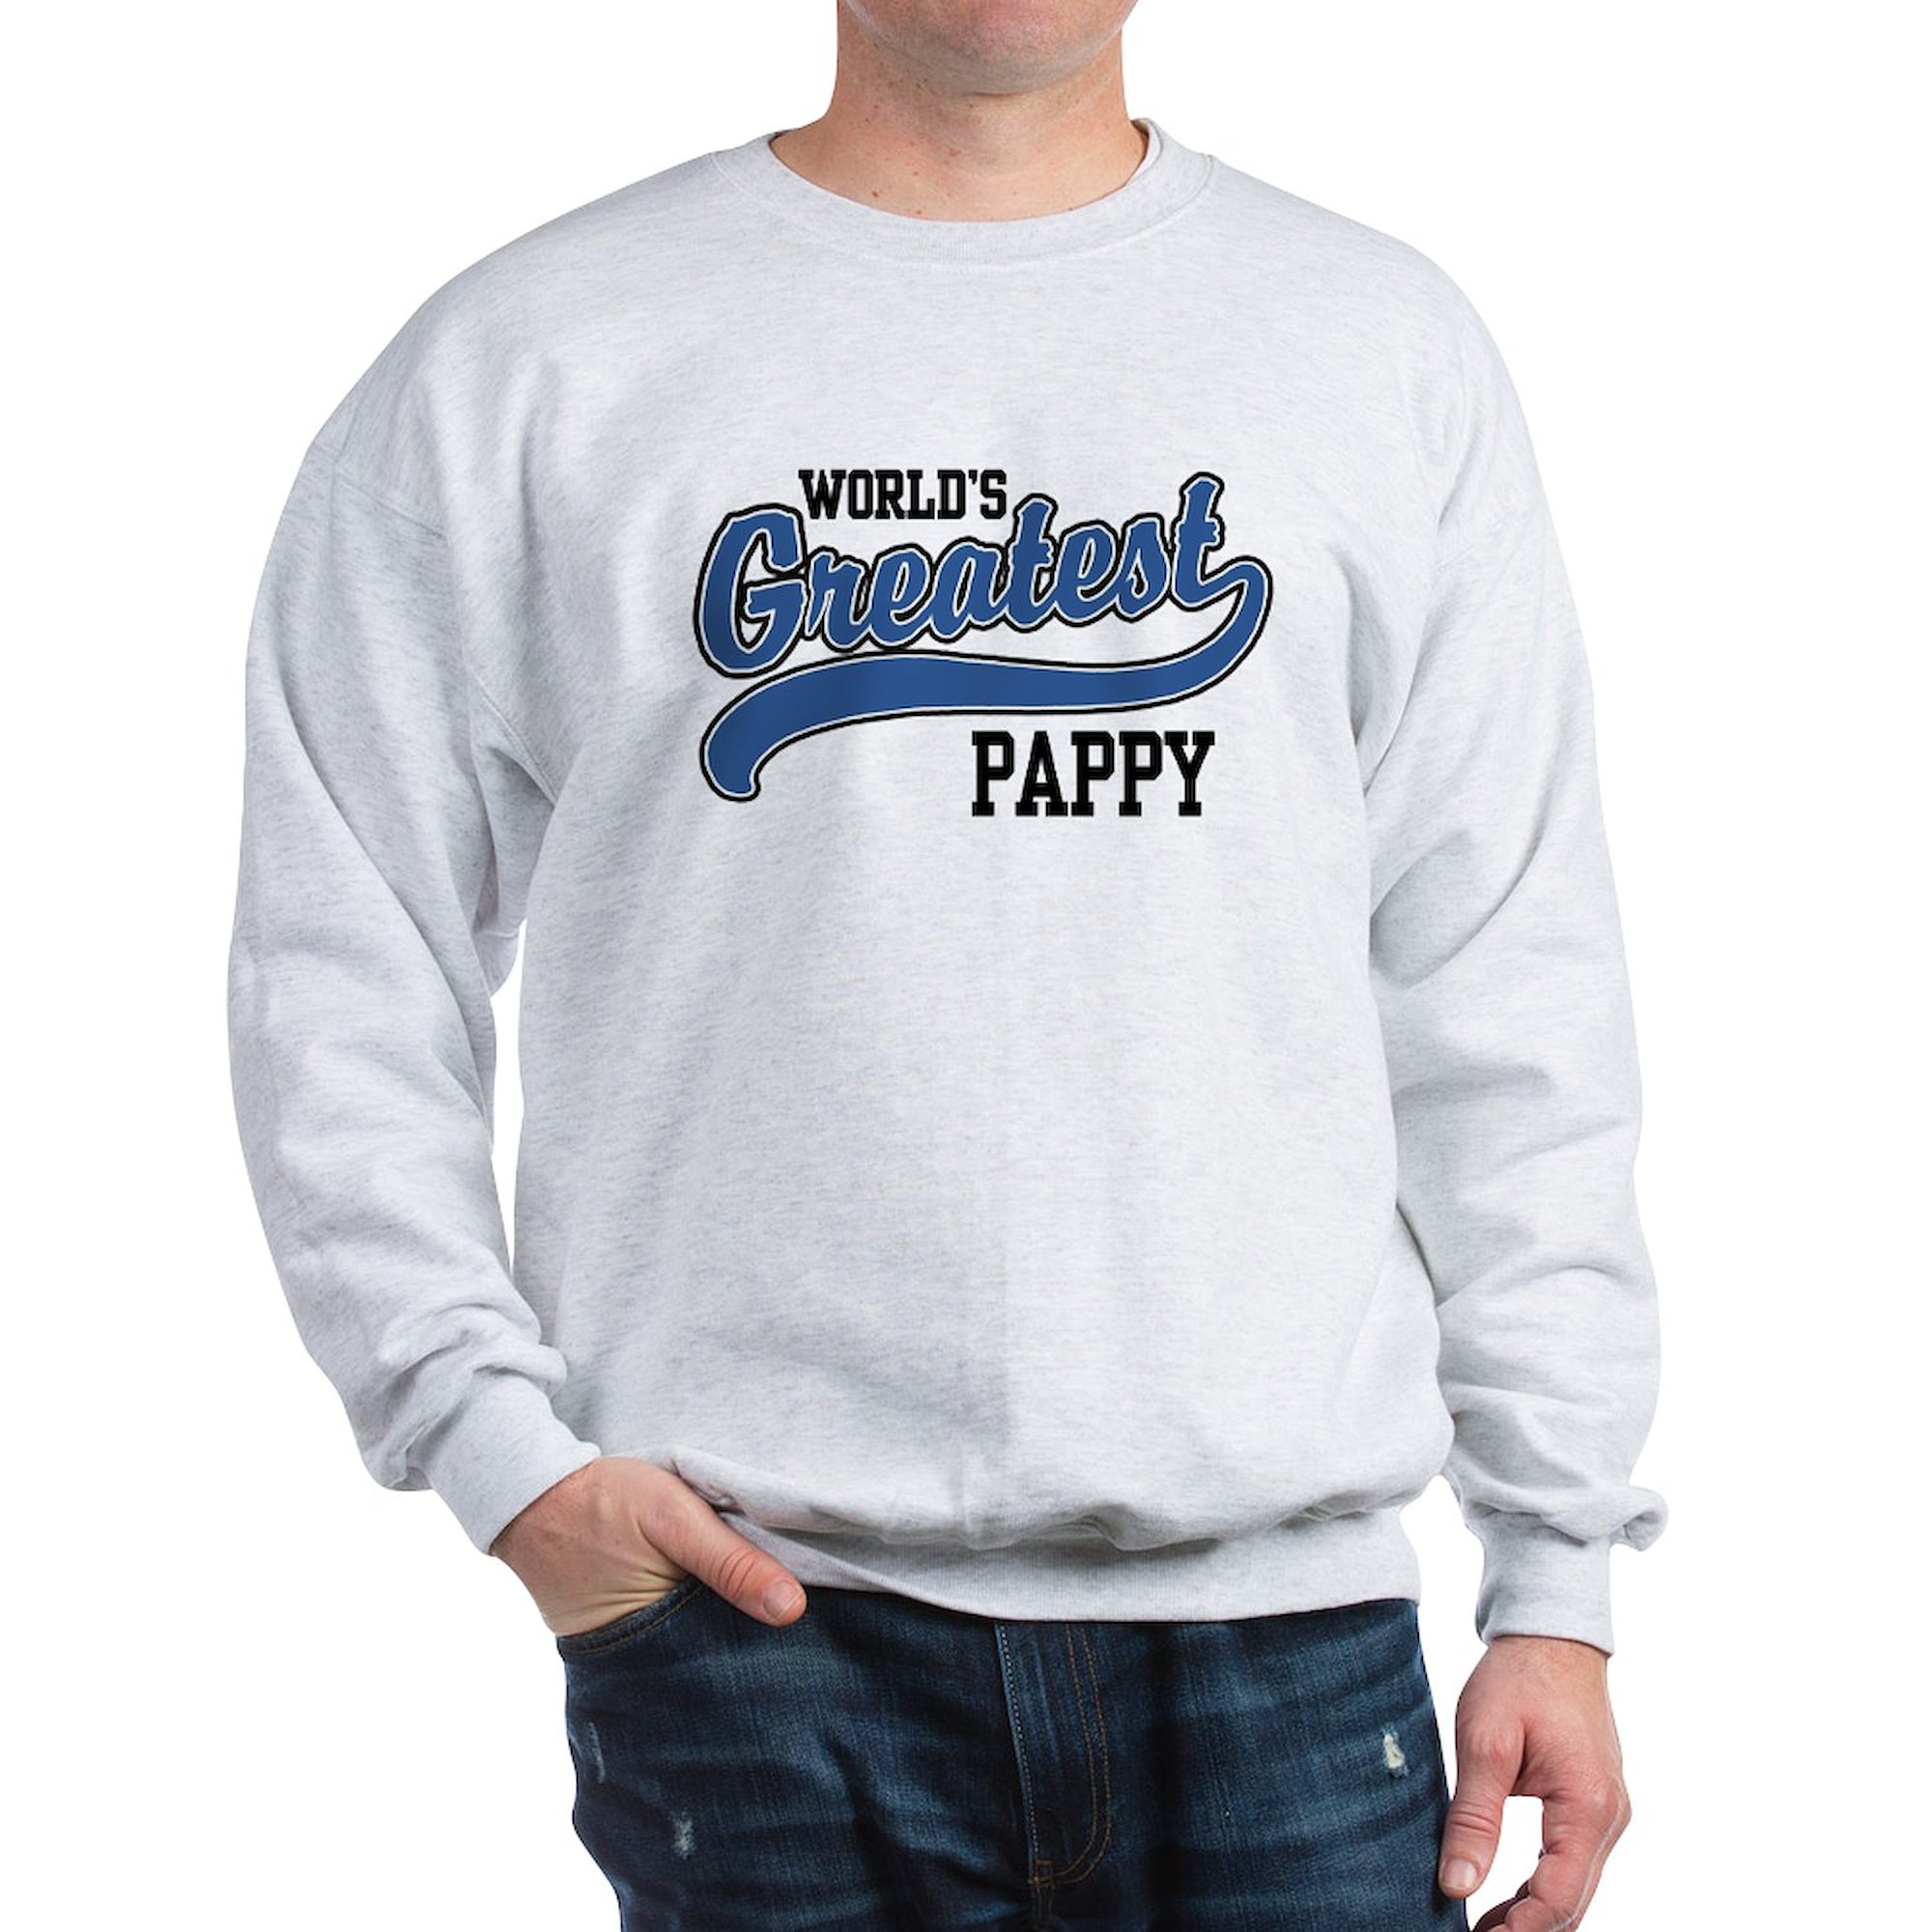 CafePress - World's Greatest Pappy Sweatshirt - Crew Neck Sweatshirt - image 1 of 4